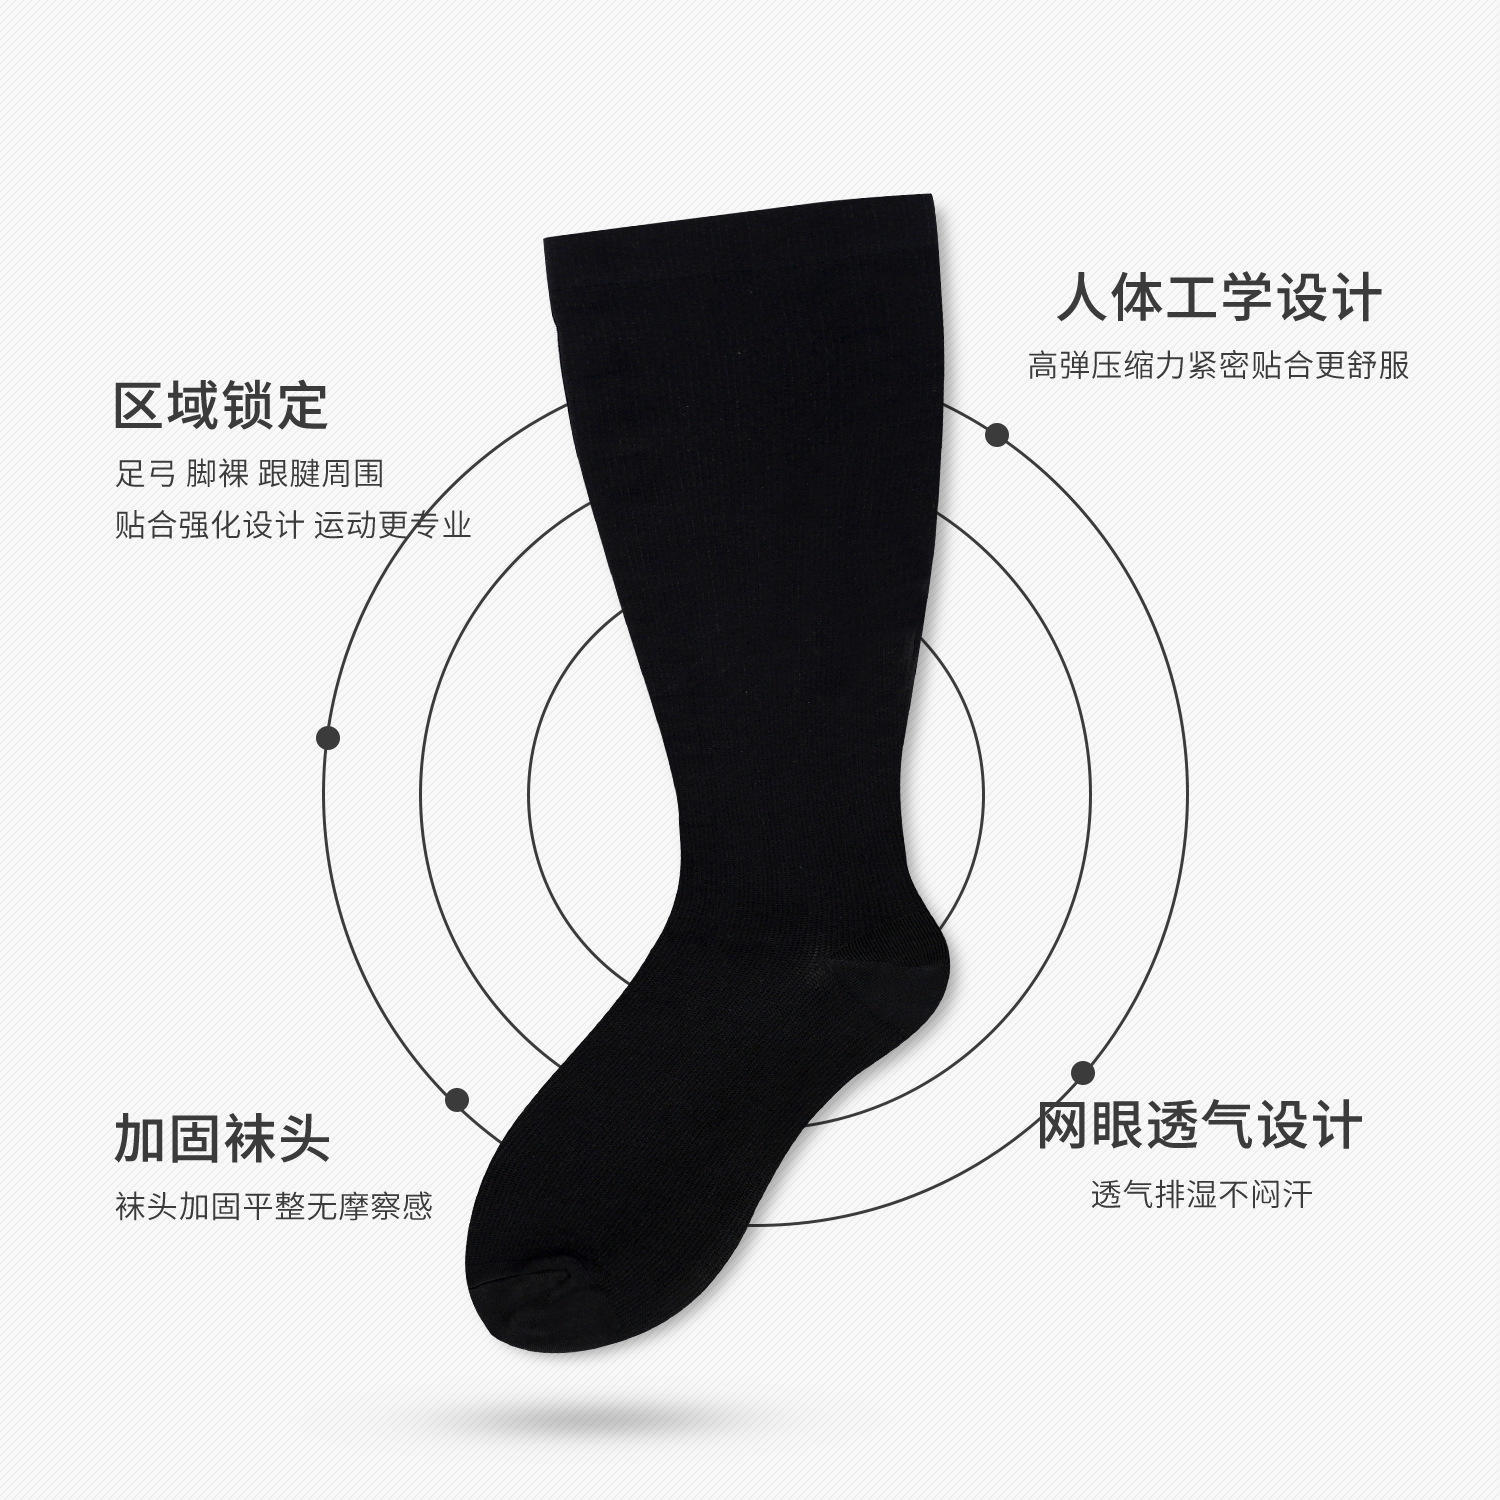 OEM custom design knee high compression socks plus size oversized socks